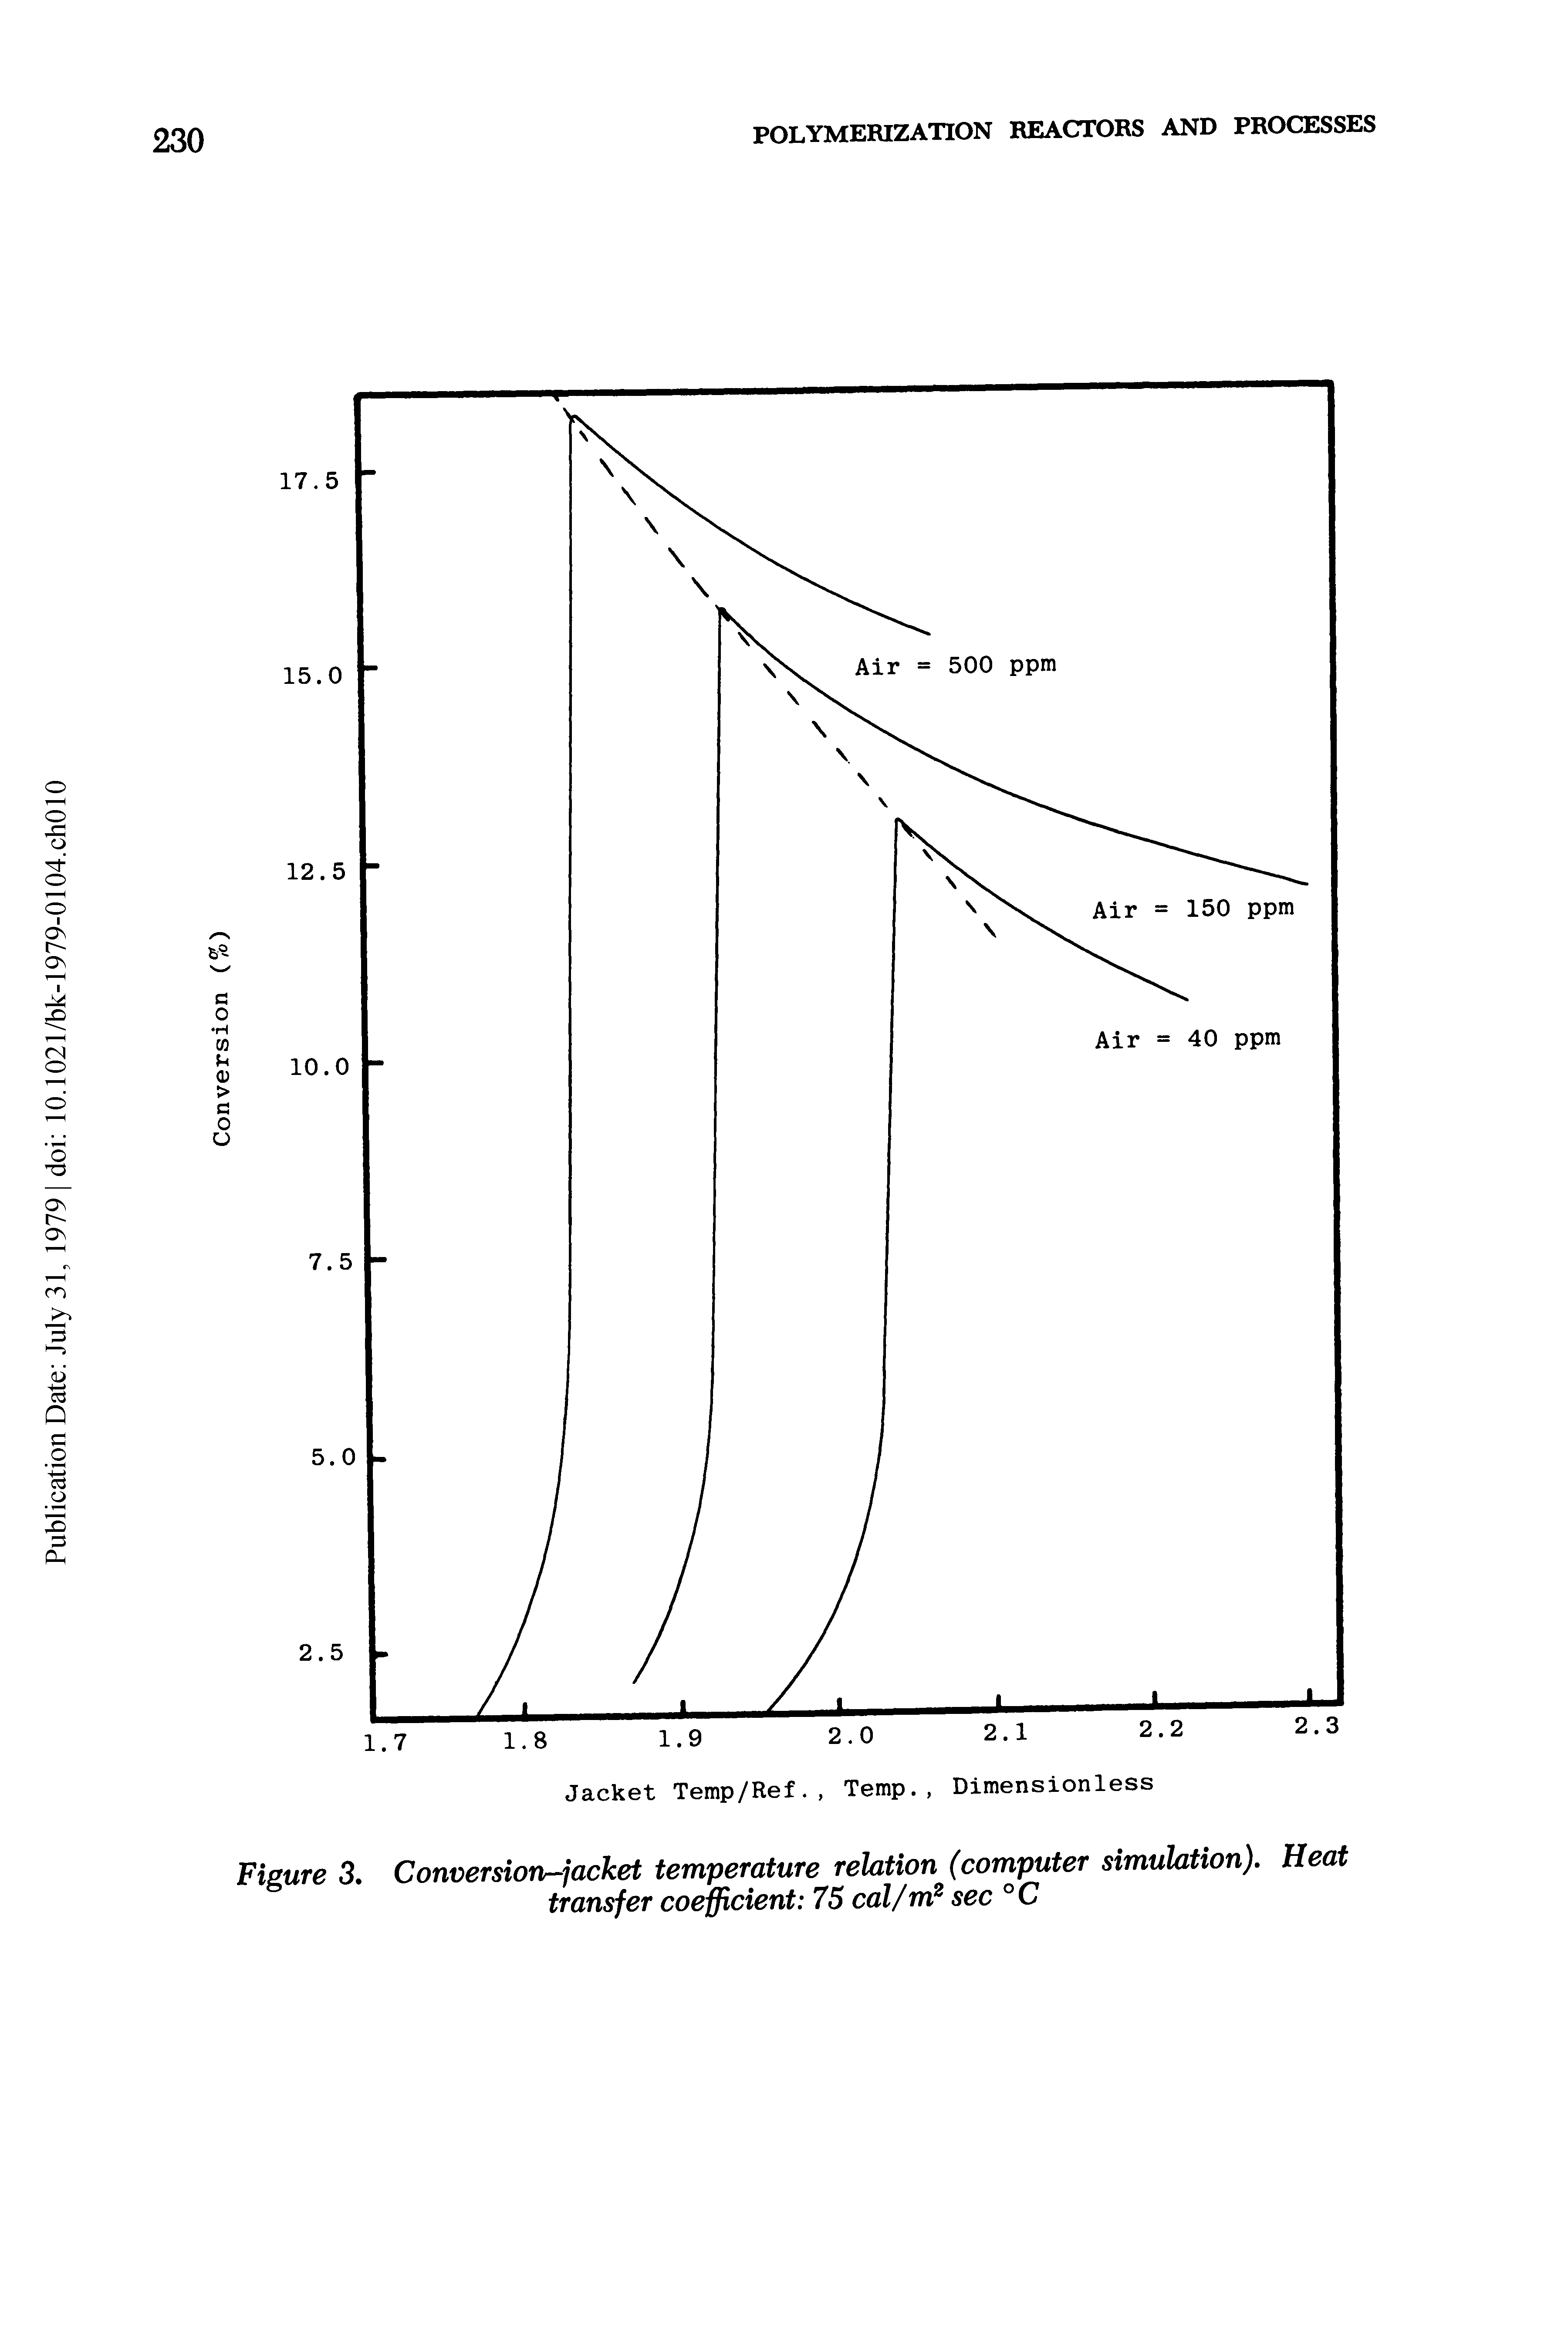 Figure 3. Conversion-jacket temperature relation (computer simulation). Heat transfer coefficient 75 cal/m sec °C...